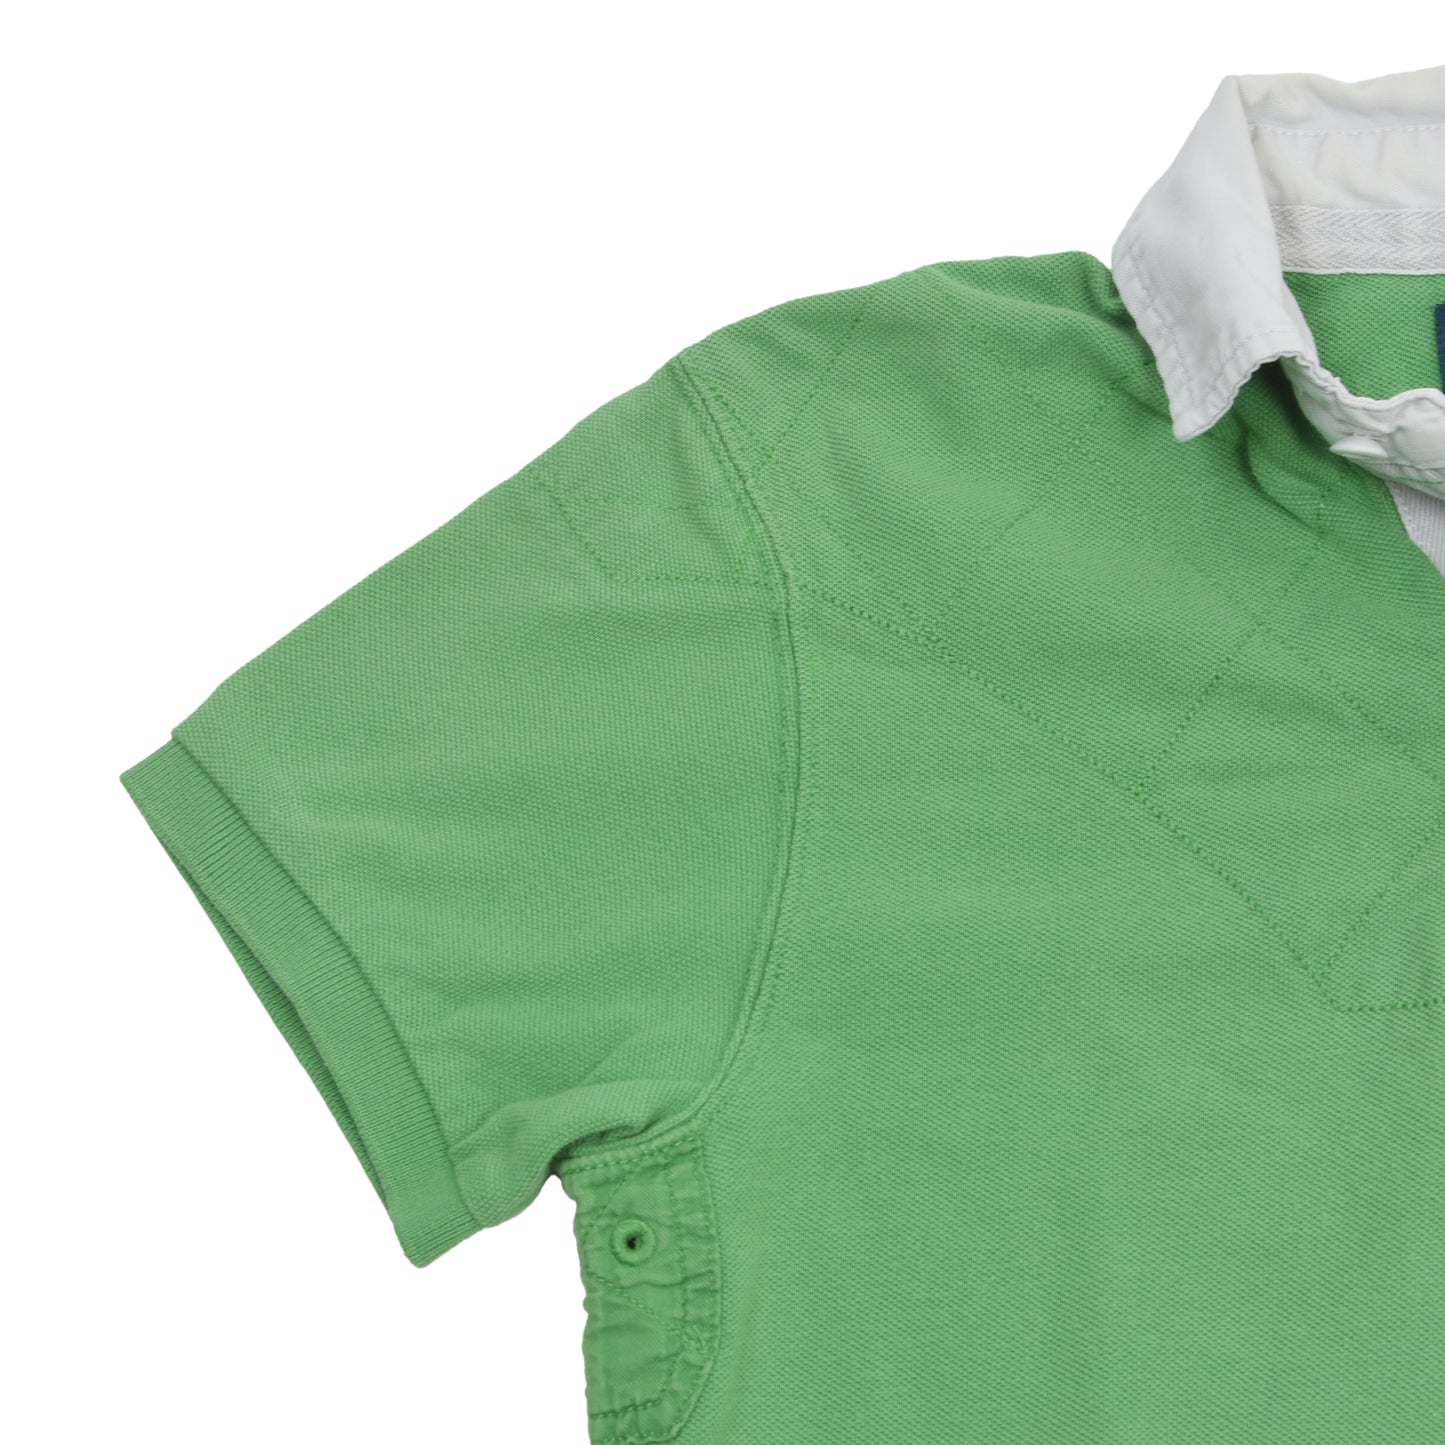 3x Polo Ralph Lauren Polo Shirts Shirts Size S Custom Fit - Blue, Green, Striped